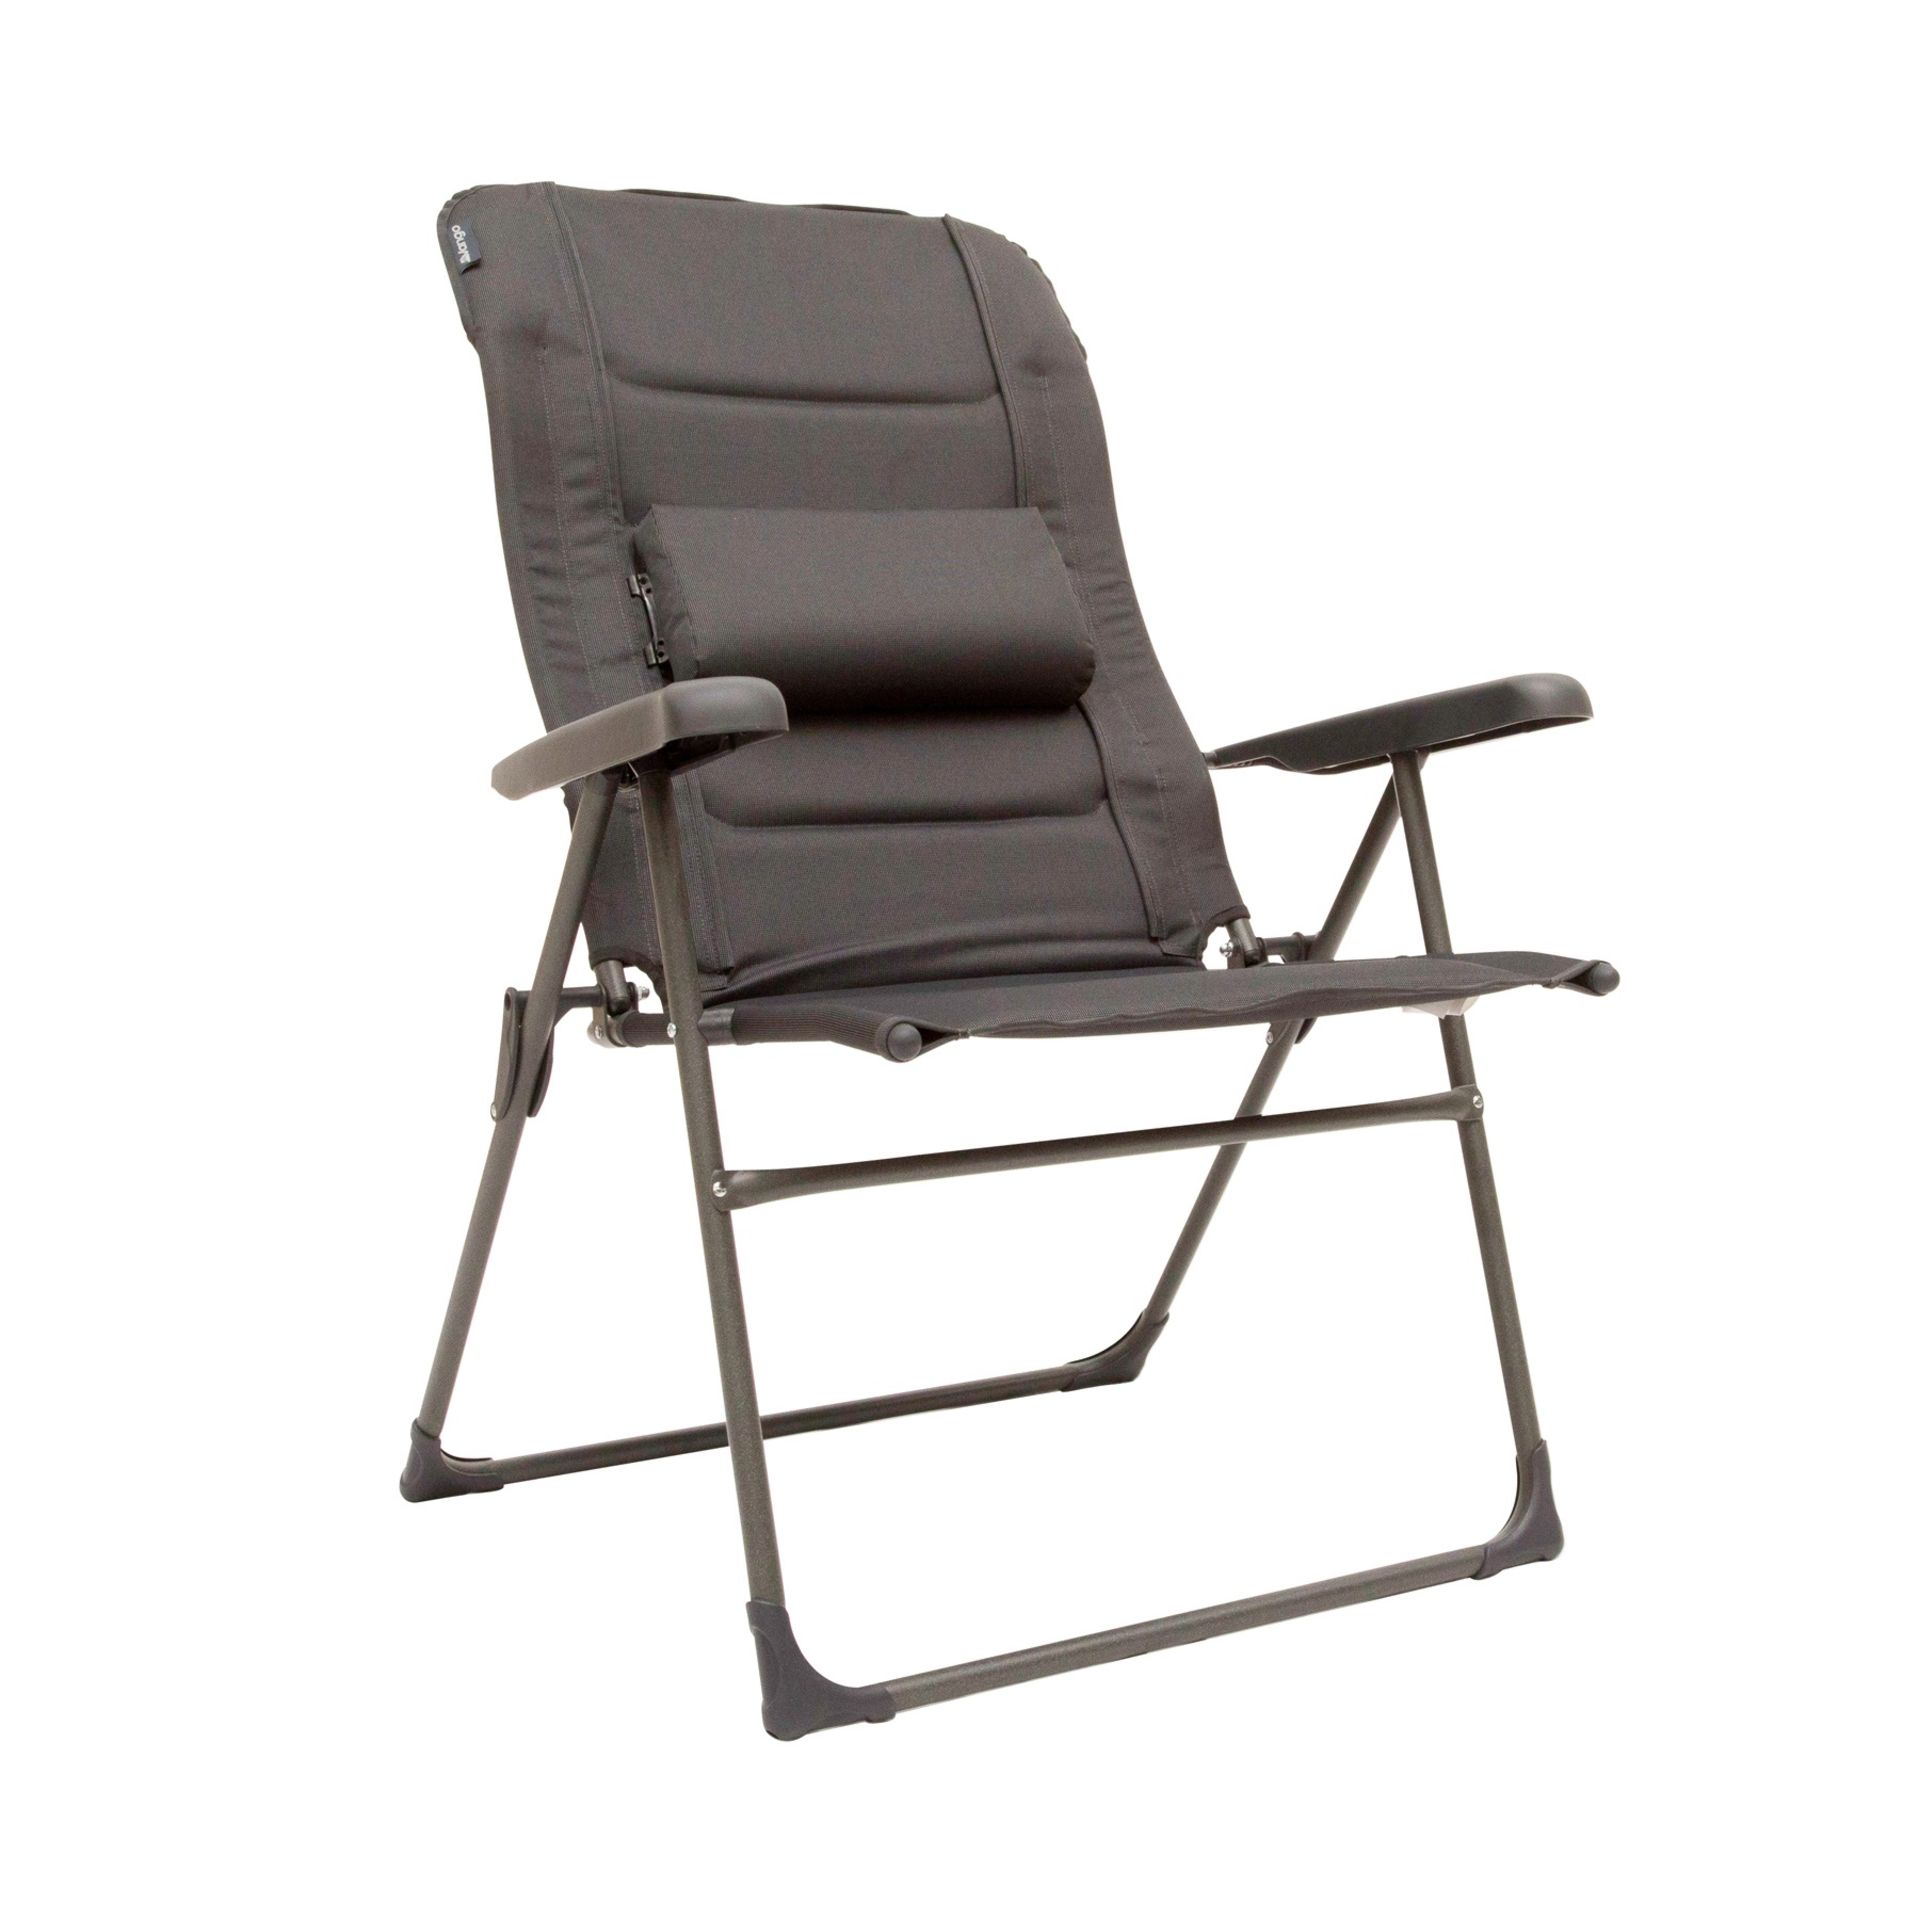 2 x Vango Hampton Grande DLX Chair, Excalibur, Ext - Image 3 of 4